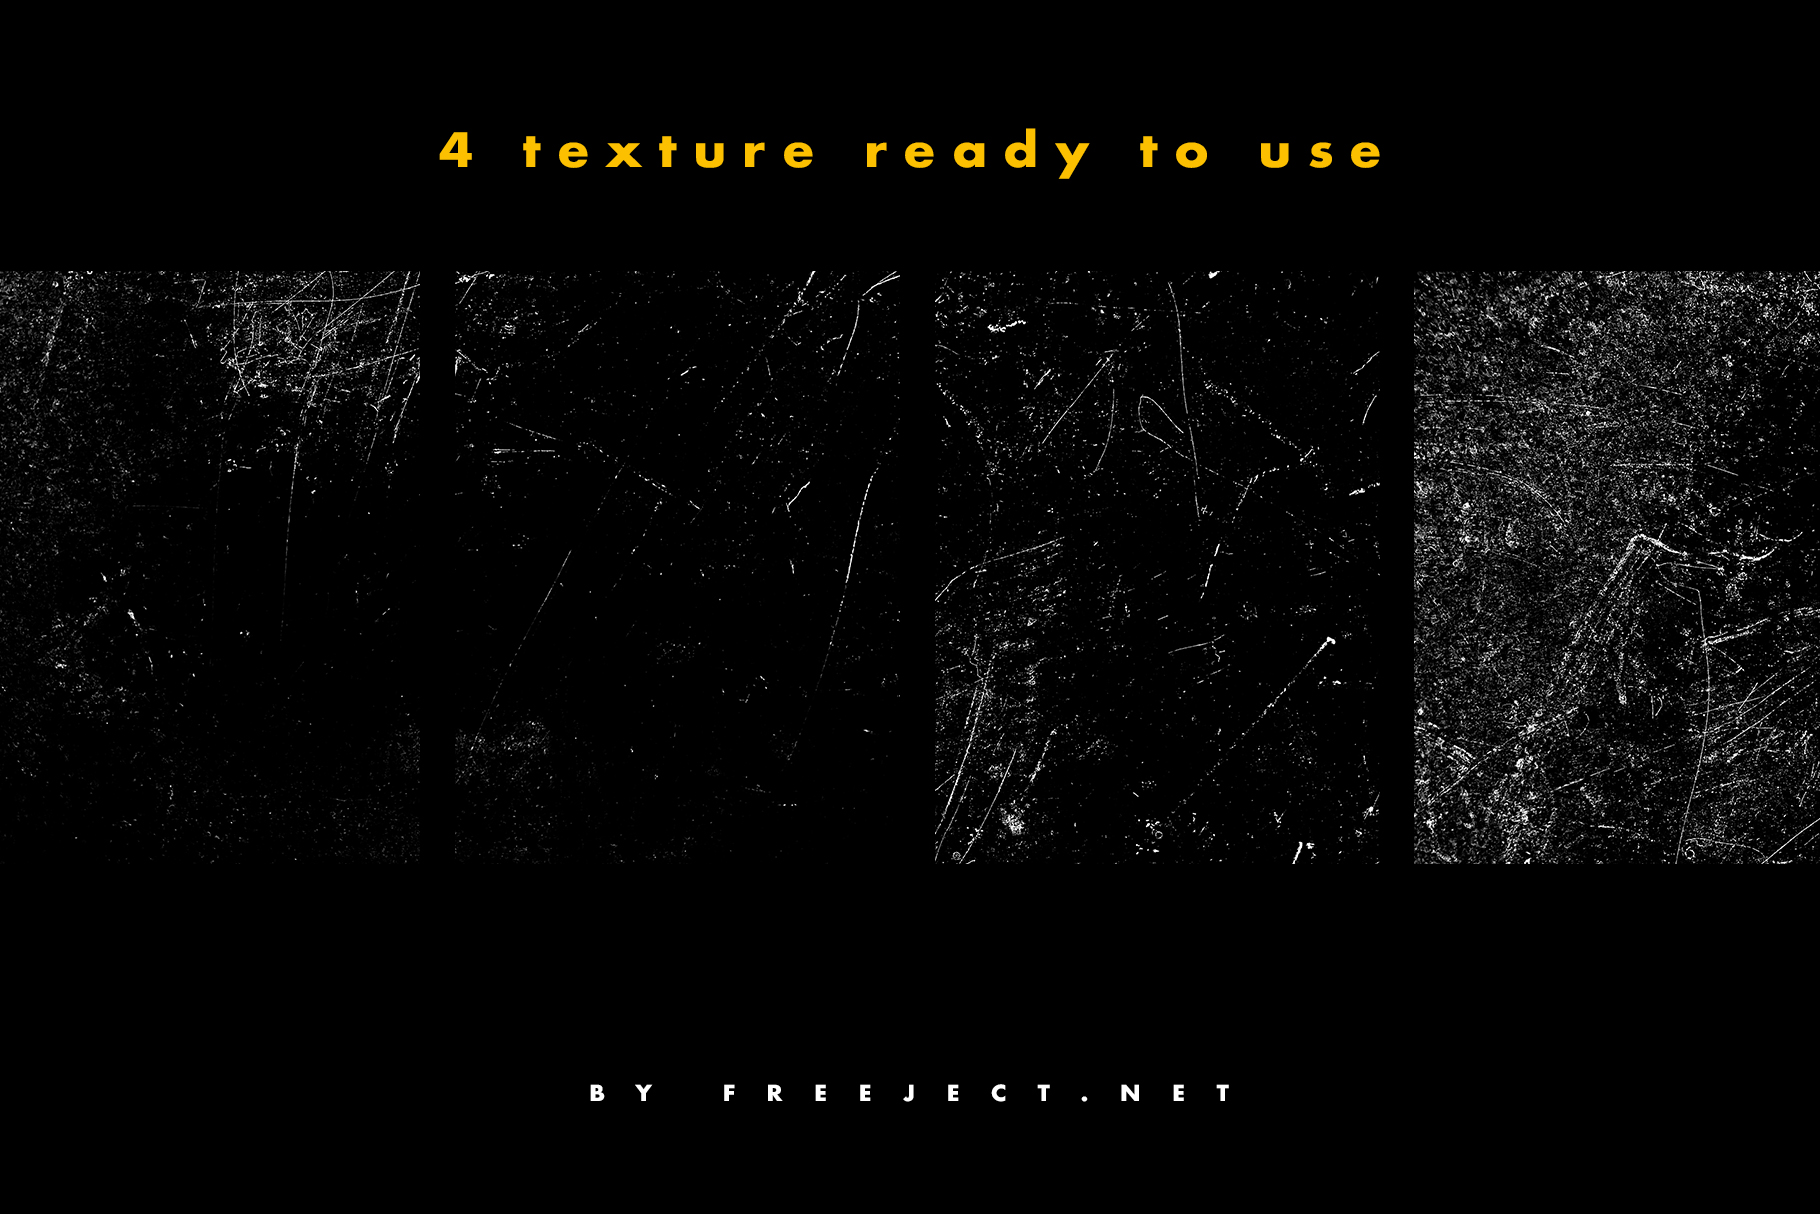 Free Download Scratches Grunge Texture Background - JPG File